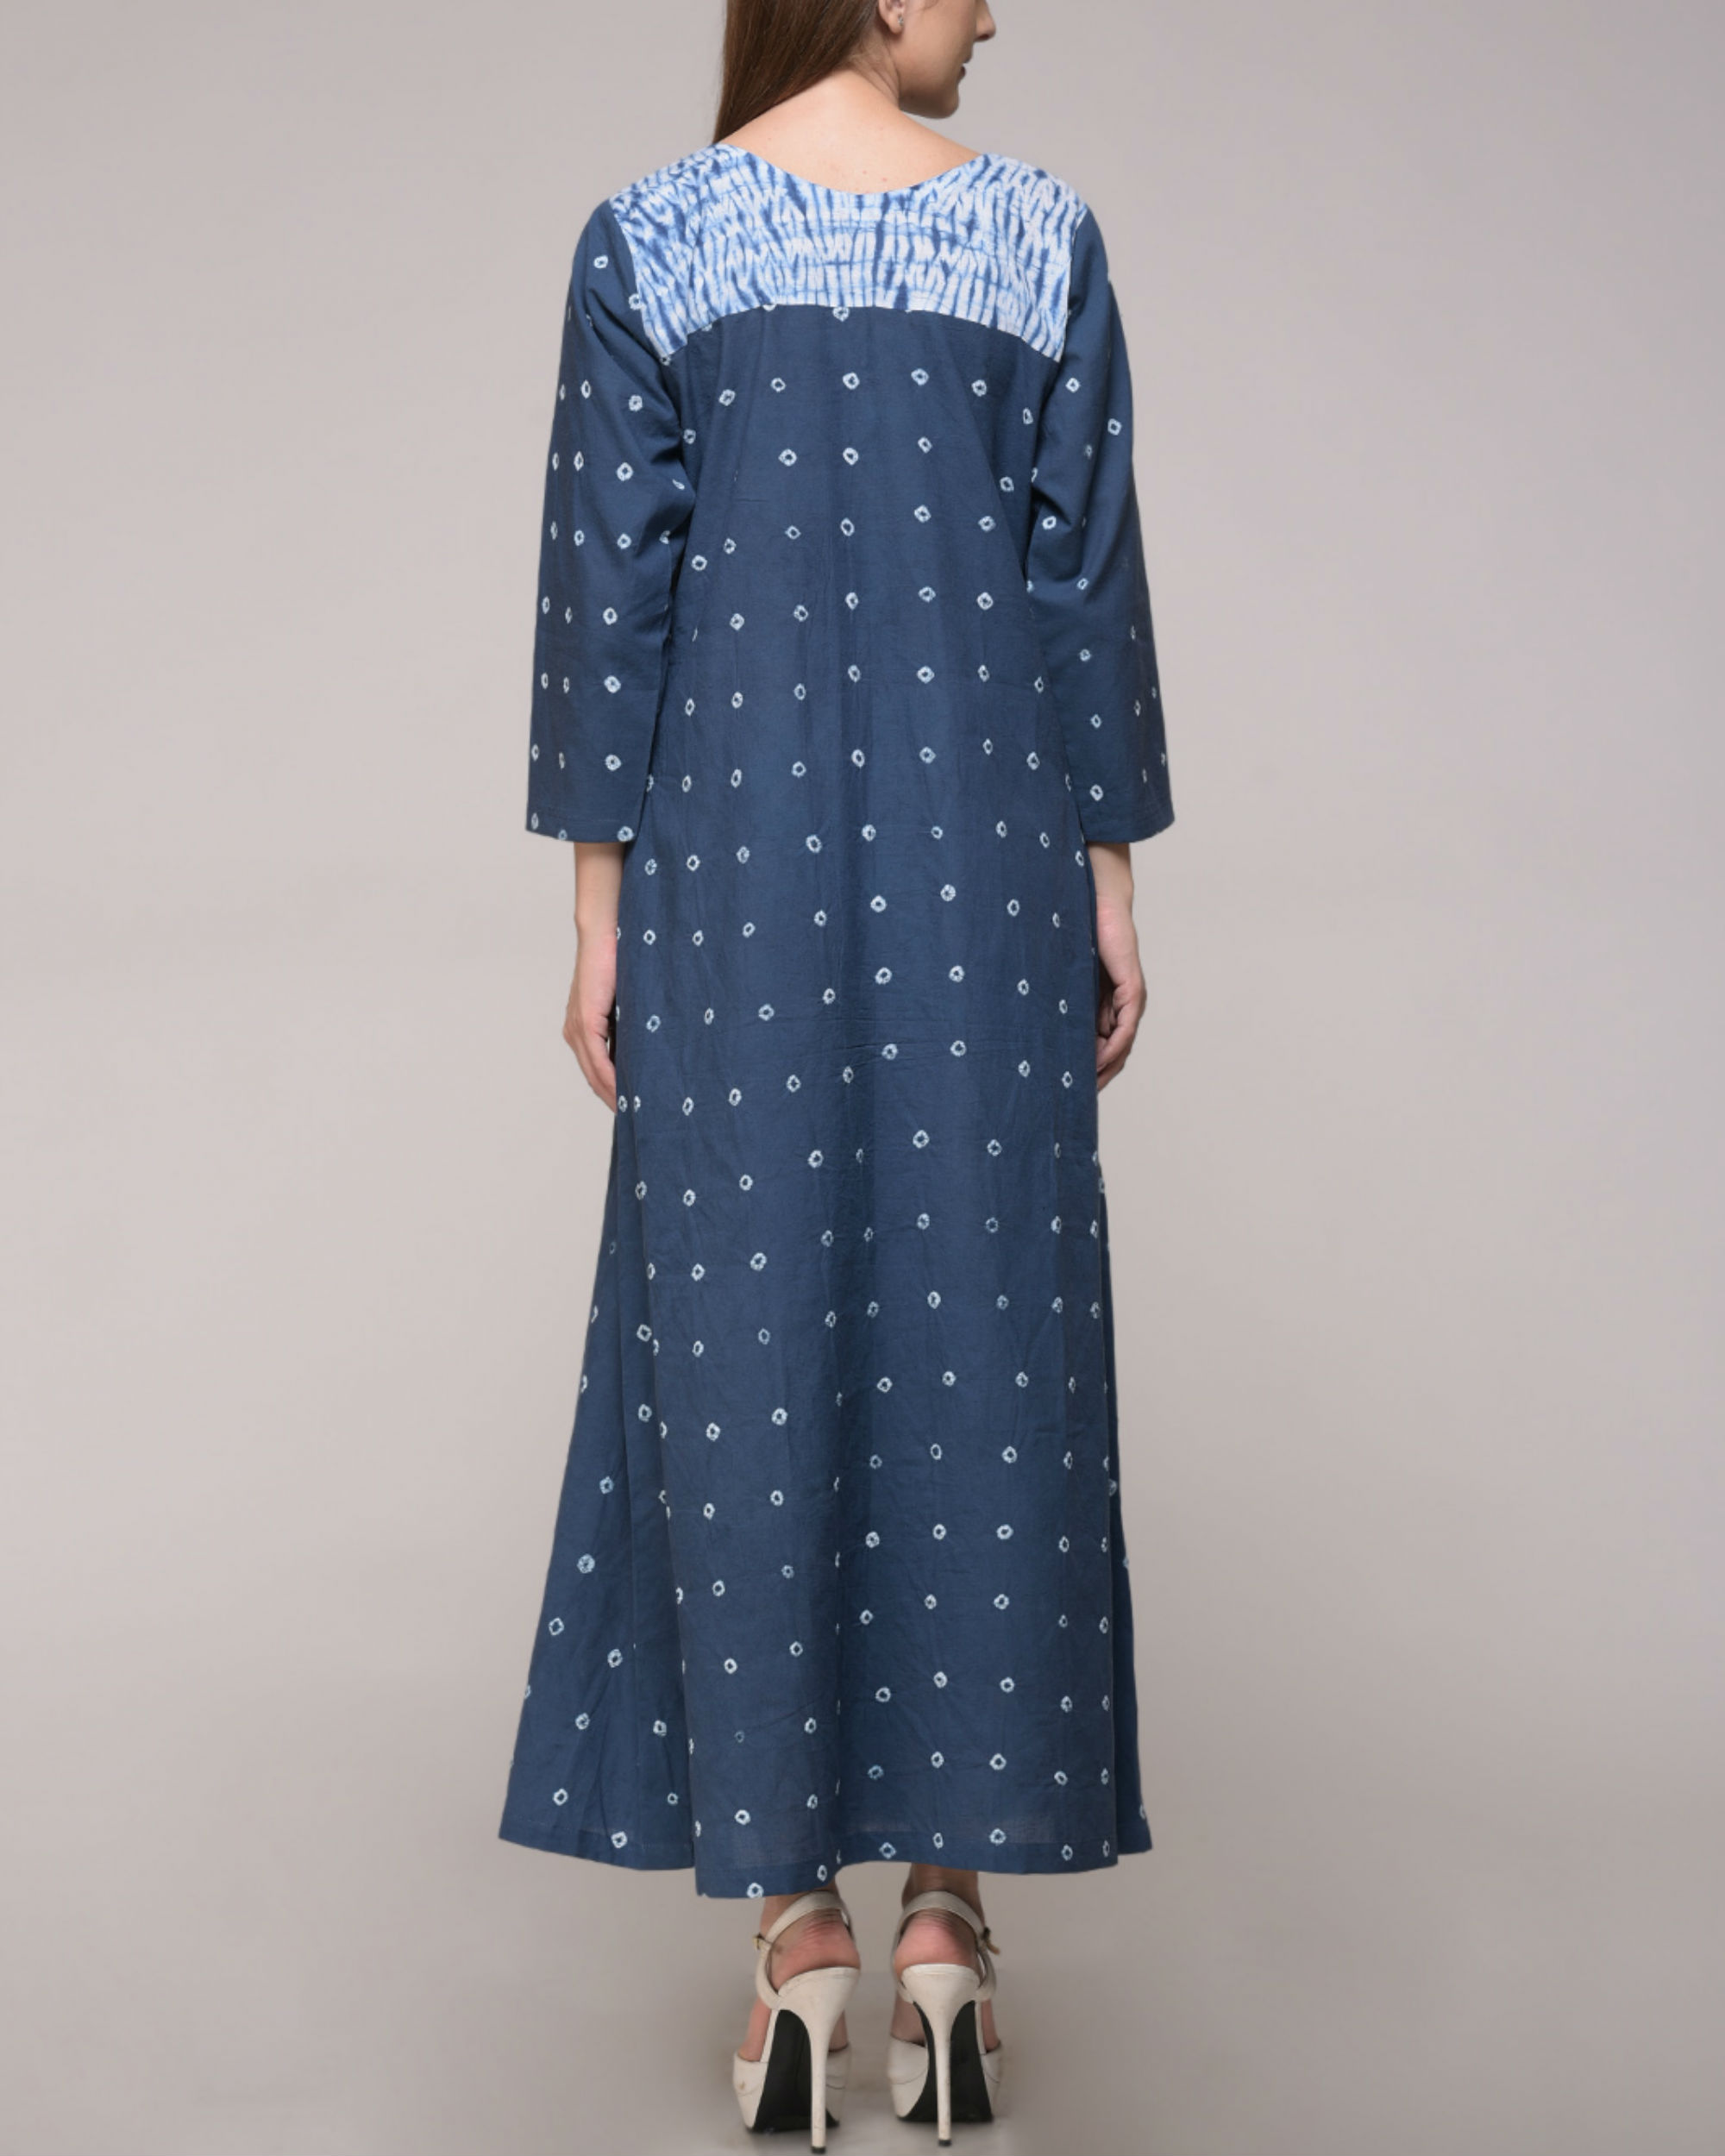 Shibori tie dye pleated dress by Simply Kitsch | The Secret Label